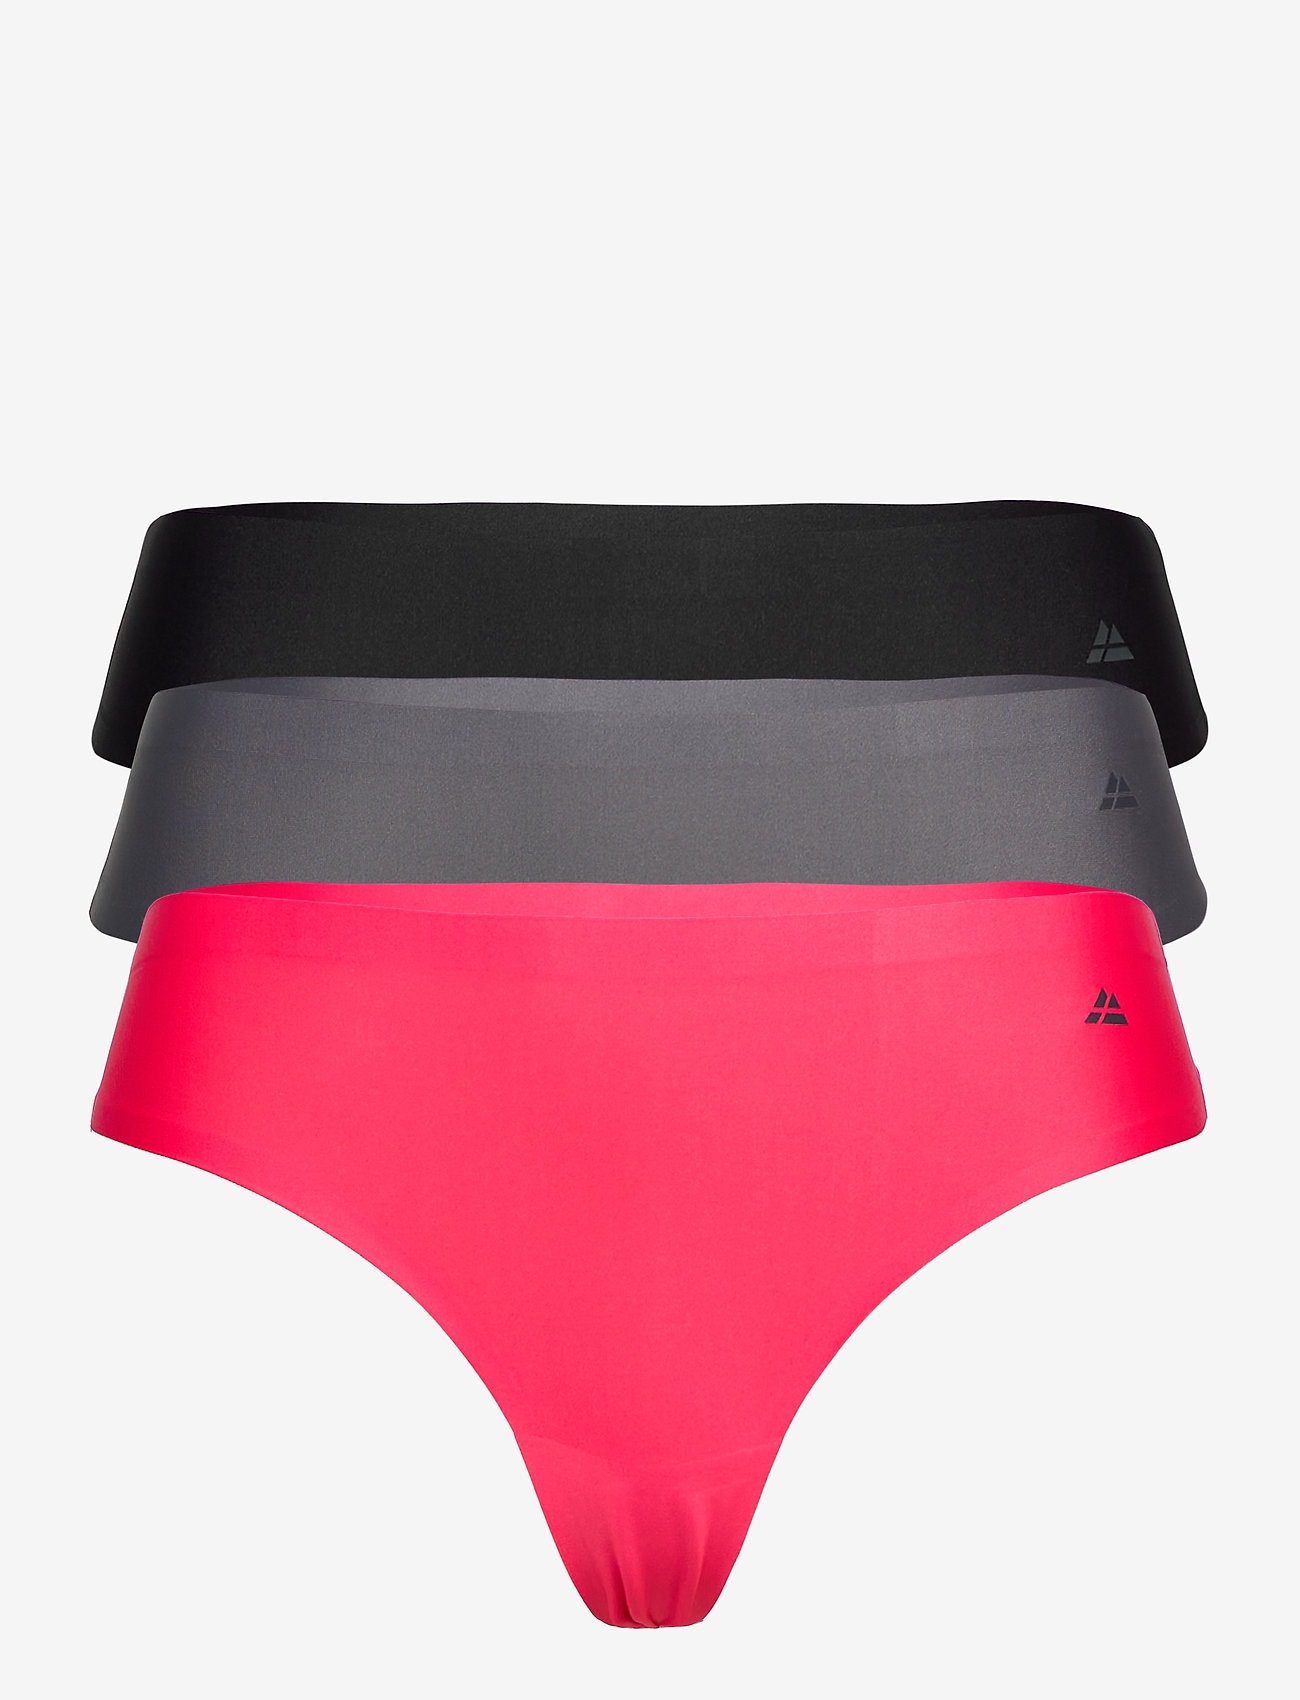 Danish Endurance - Women's Invisible Thong - seamless trosor - multicolor (1 x black, 1 x grey, 1 x pink) - 0